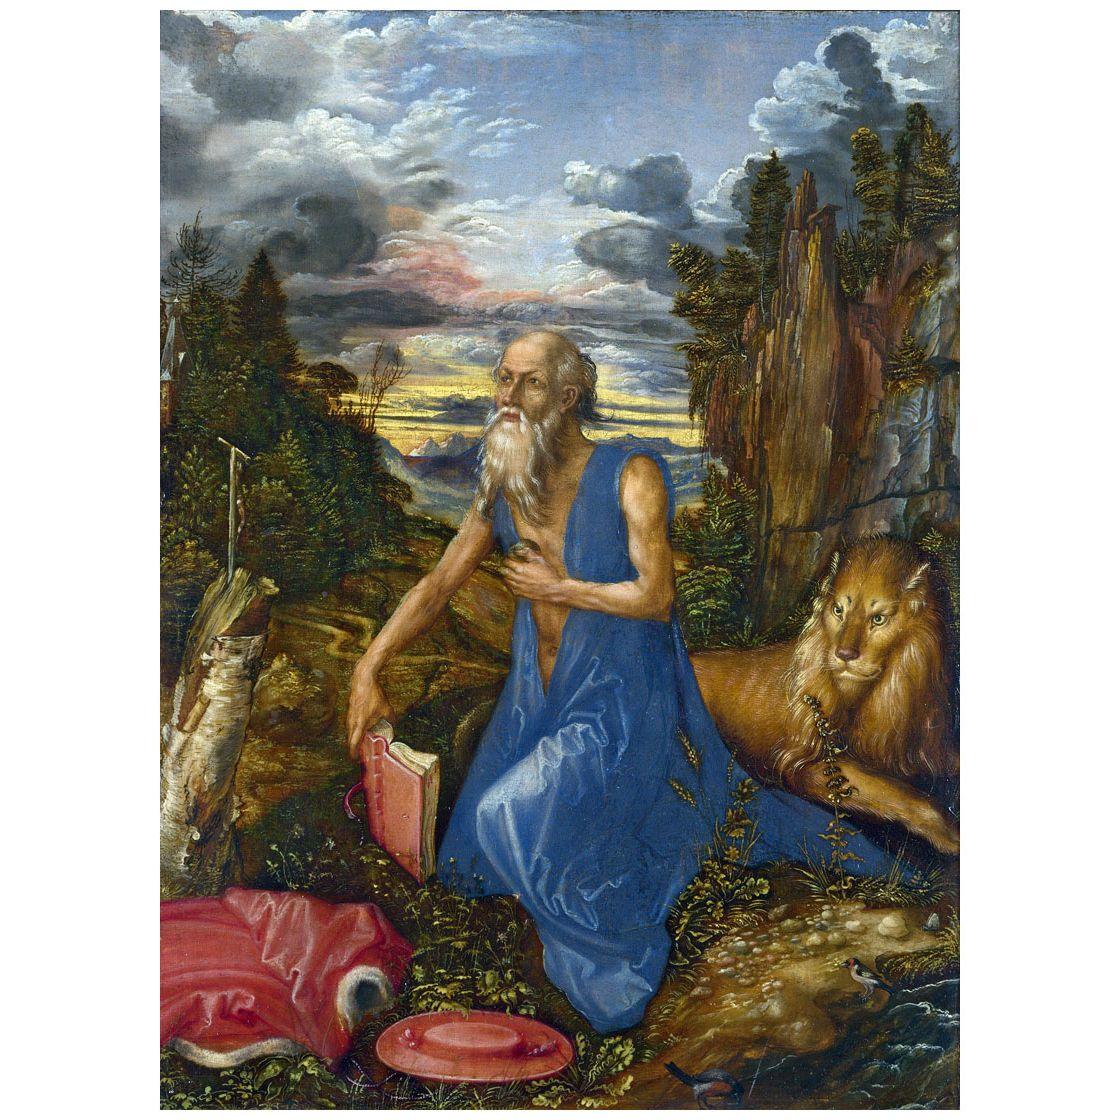 Albrecht Durer. Saint Jerome in the Wilderness. 1496. National Gallery London